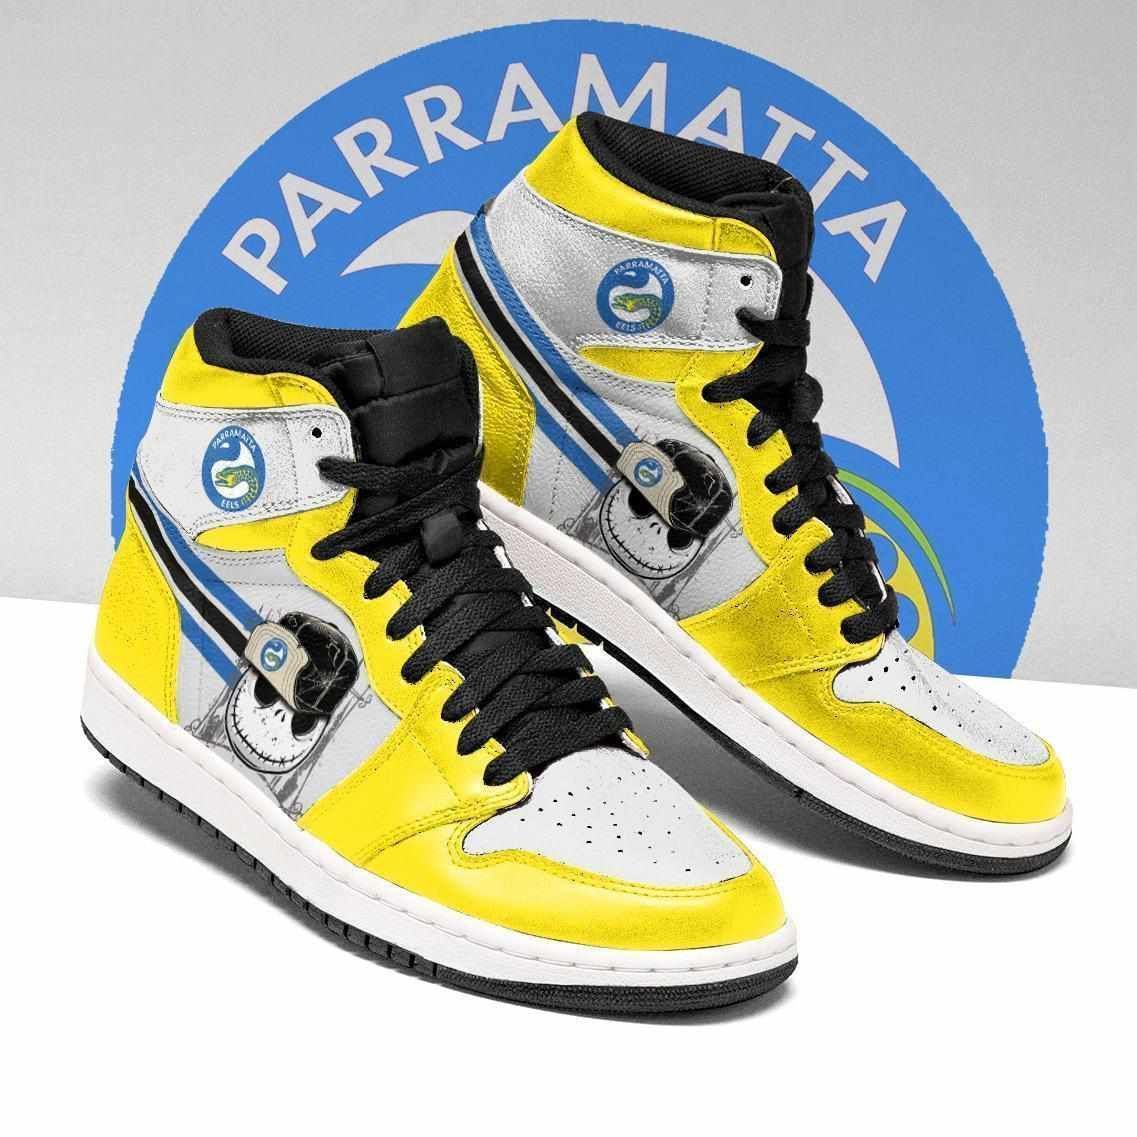 Parramatta Eels Nrl Football Jack Skellington Air Jordan Shoes Sport Sneakers